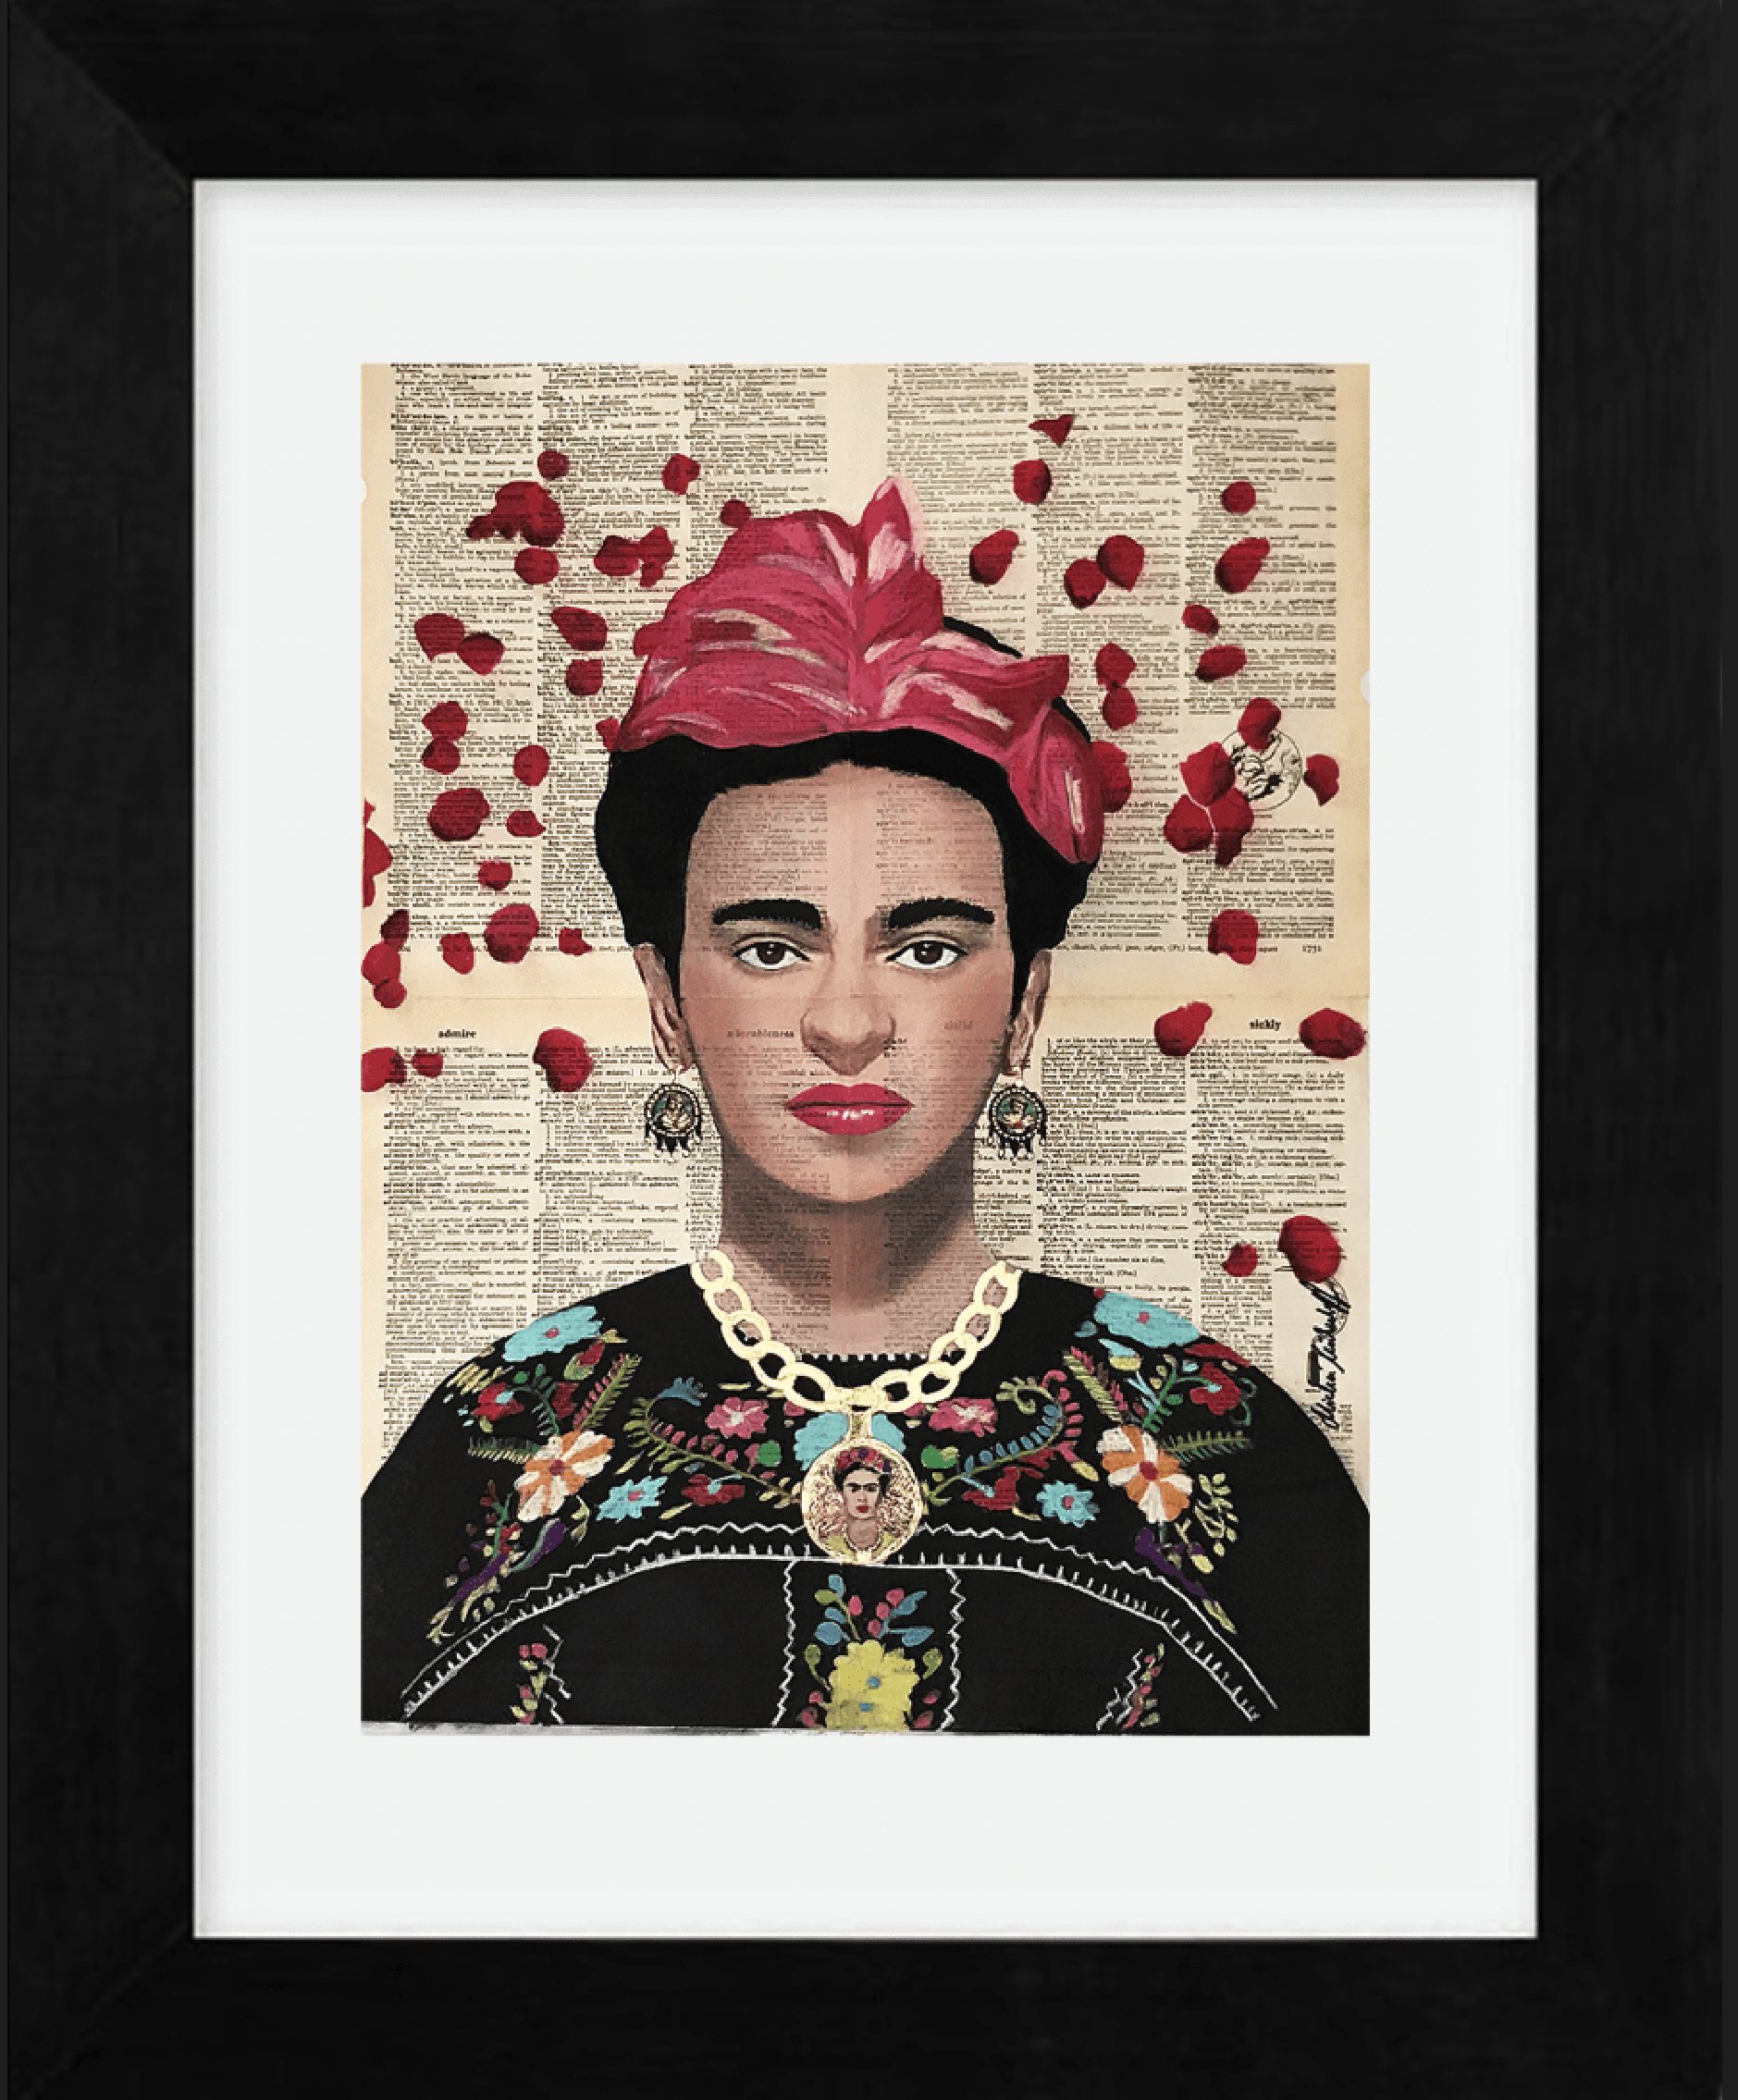 Frida Rose by Artist Rosen and Micha Kuechenhoff